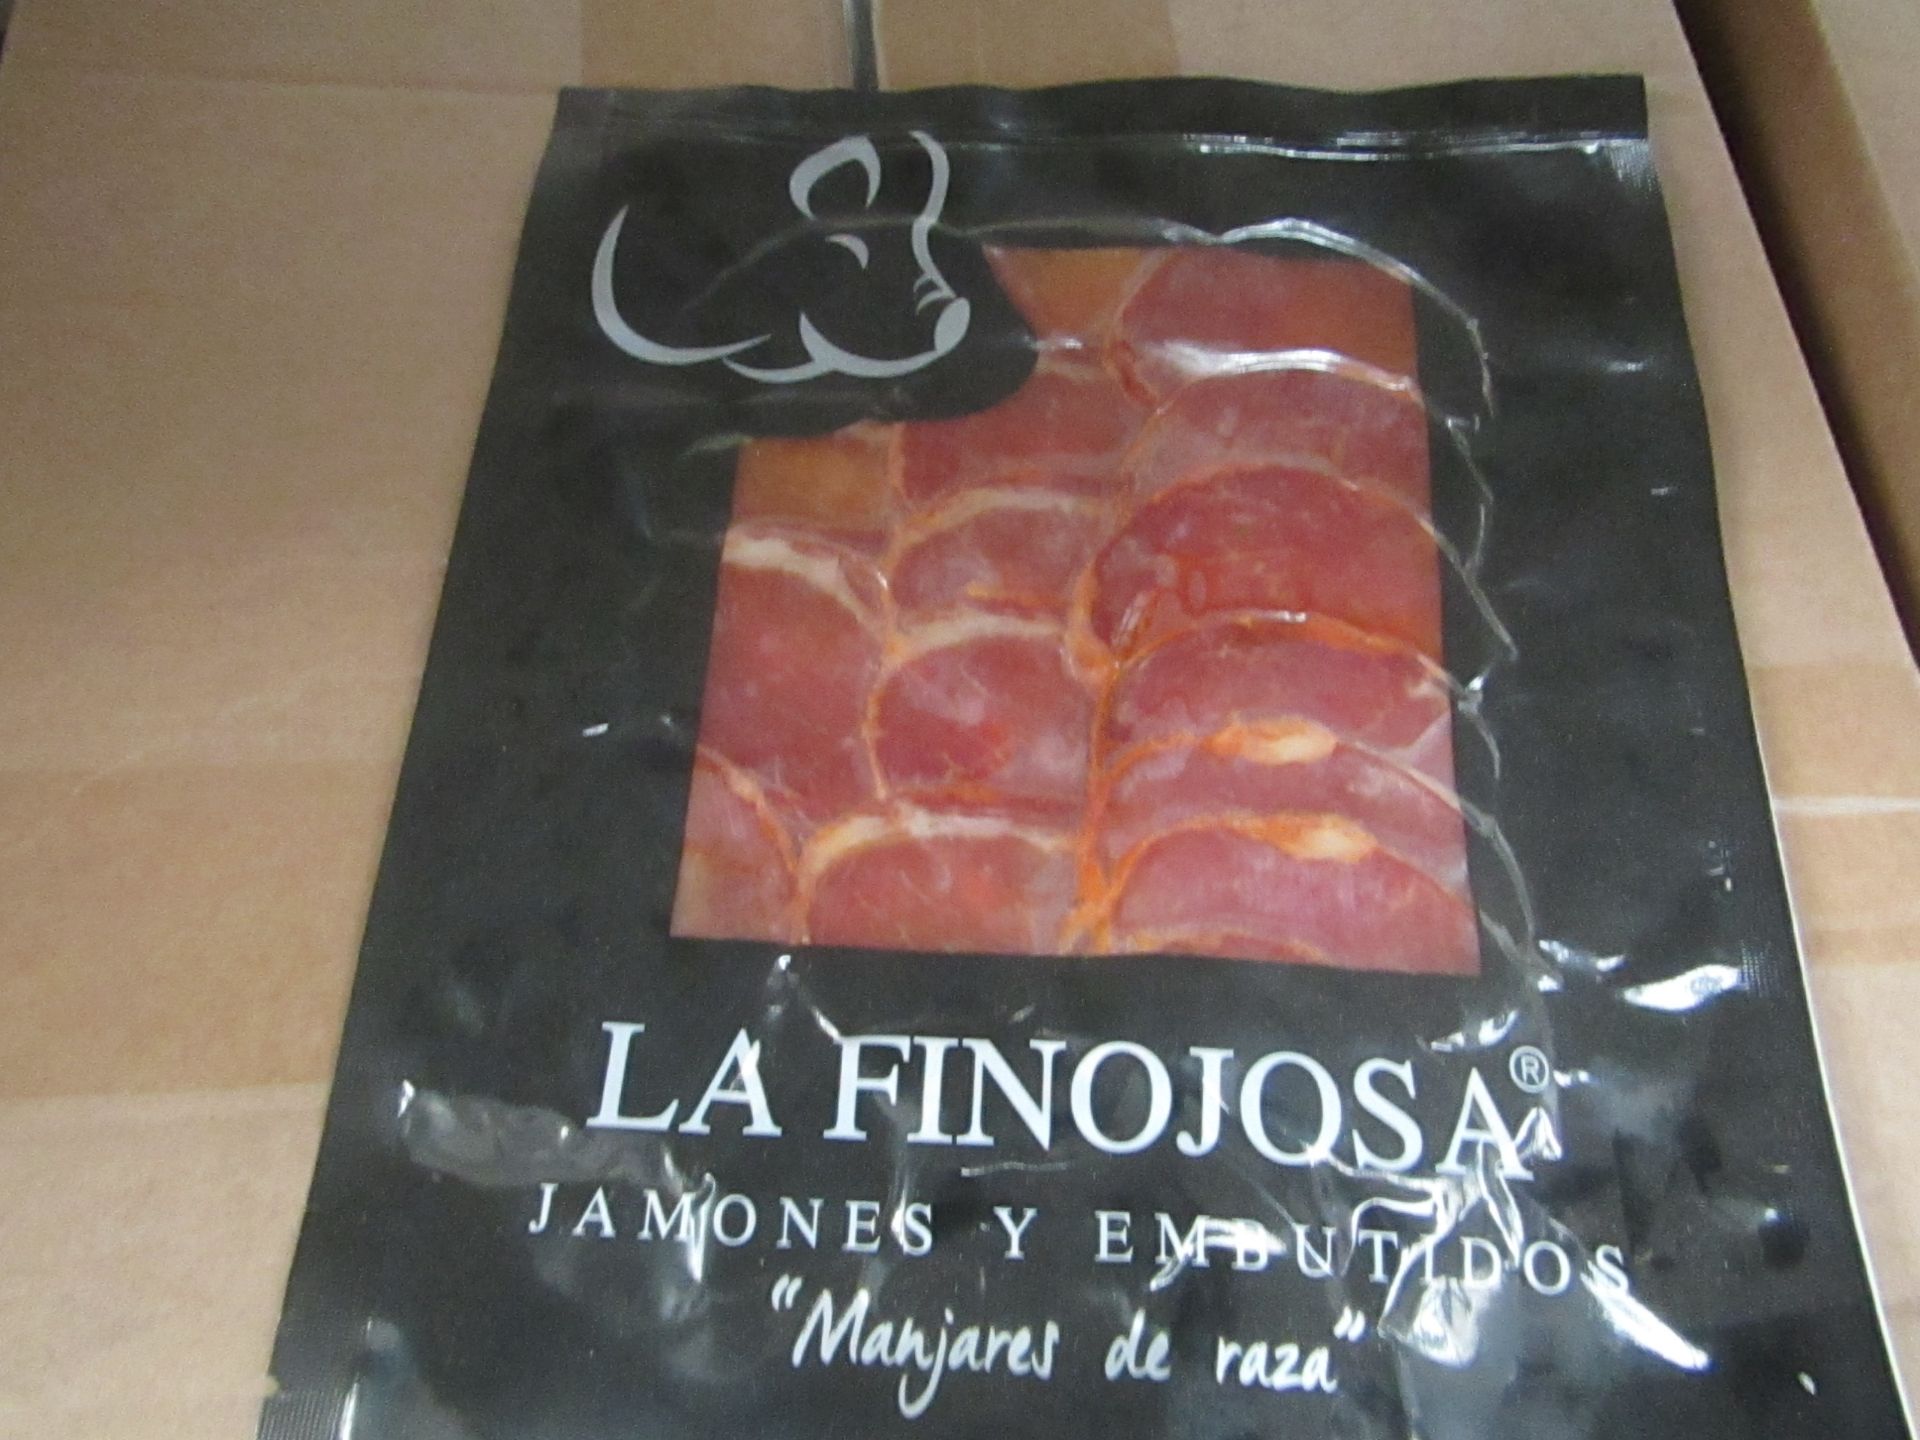 10 x La Finojosa 100g Packets Hand Carved Iberico Ham BB 7.3.22 RRP £24.50 per packet on Amazon